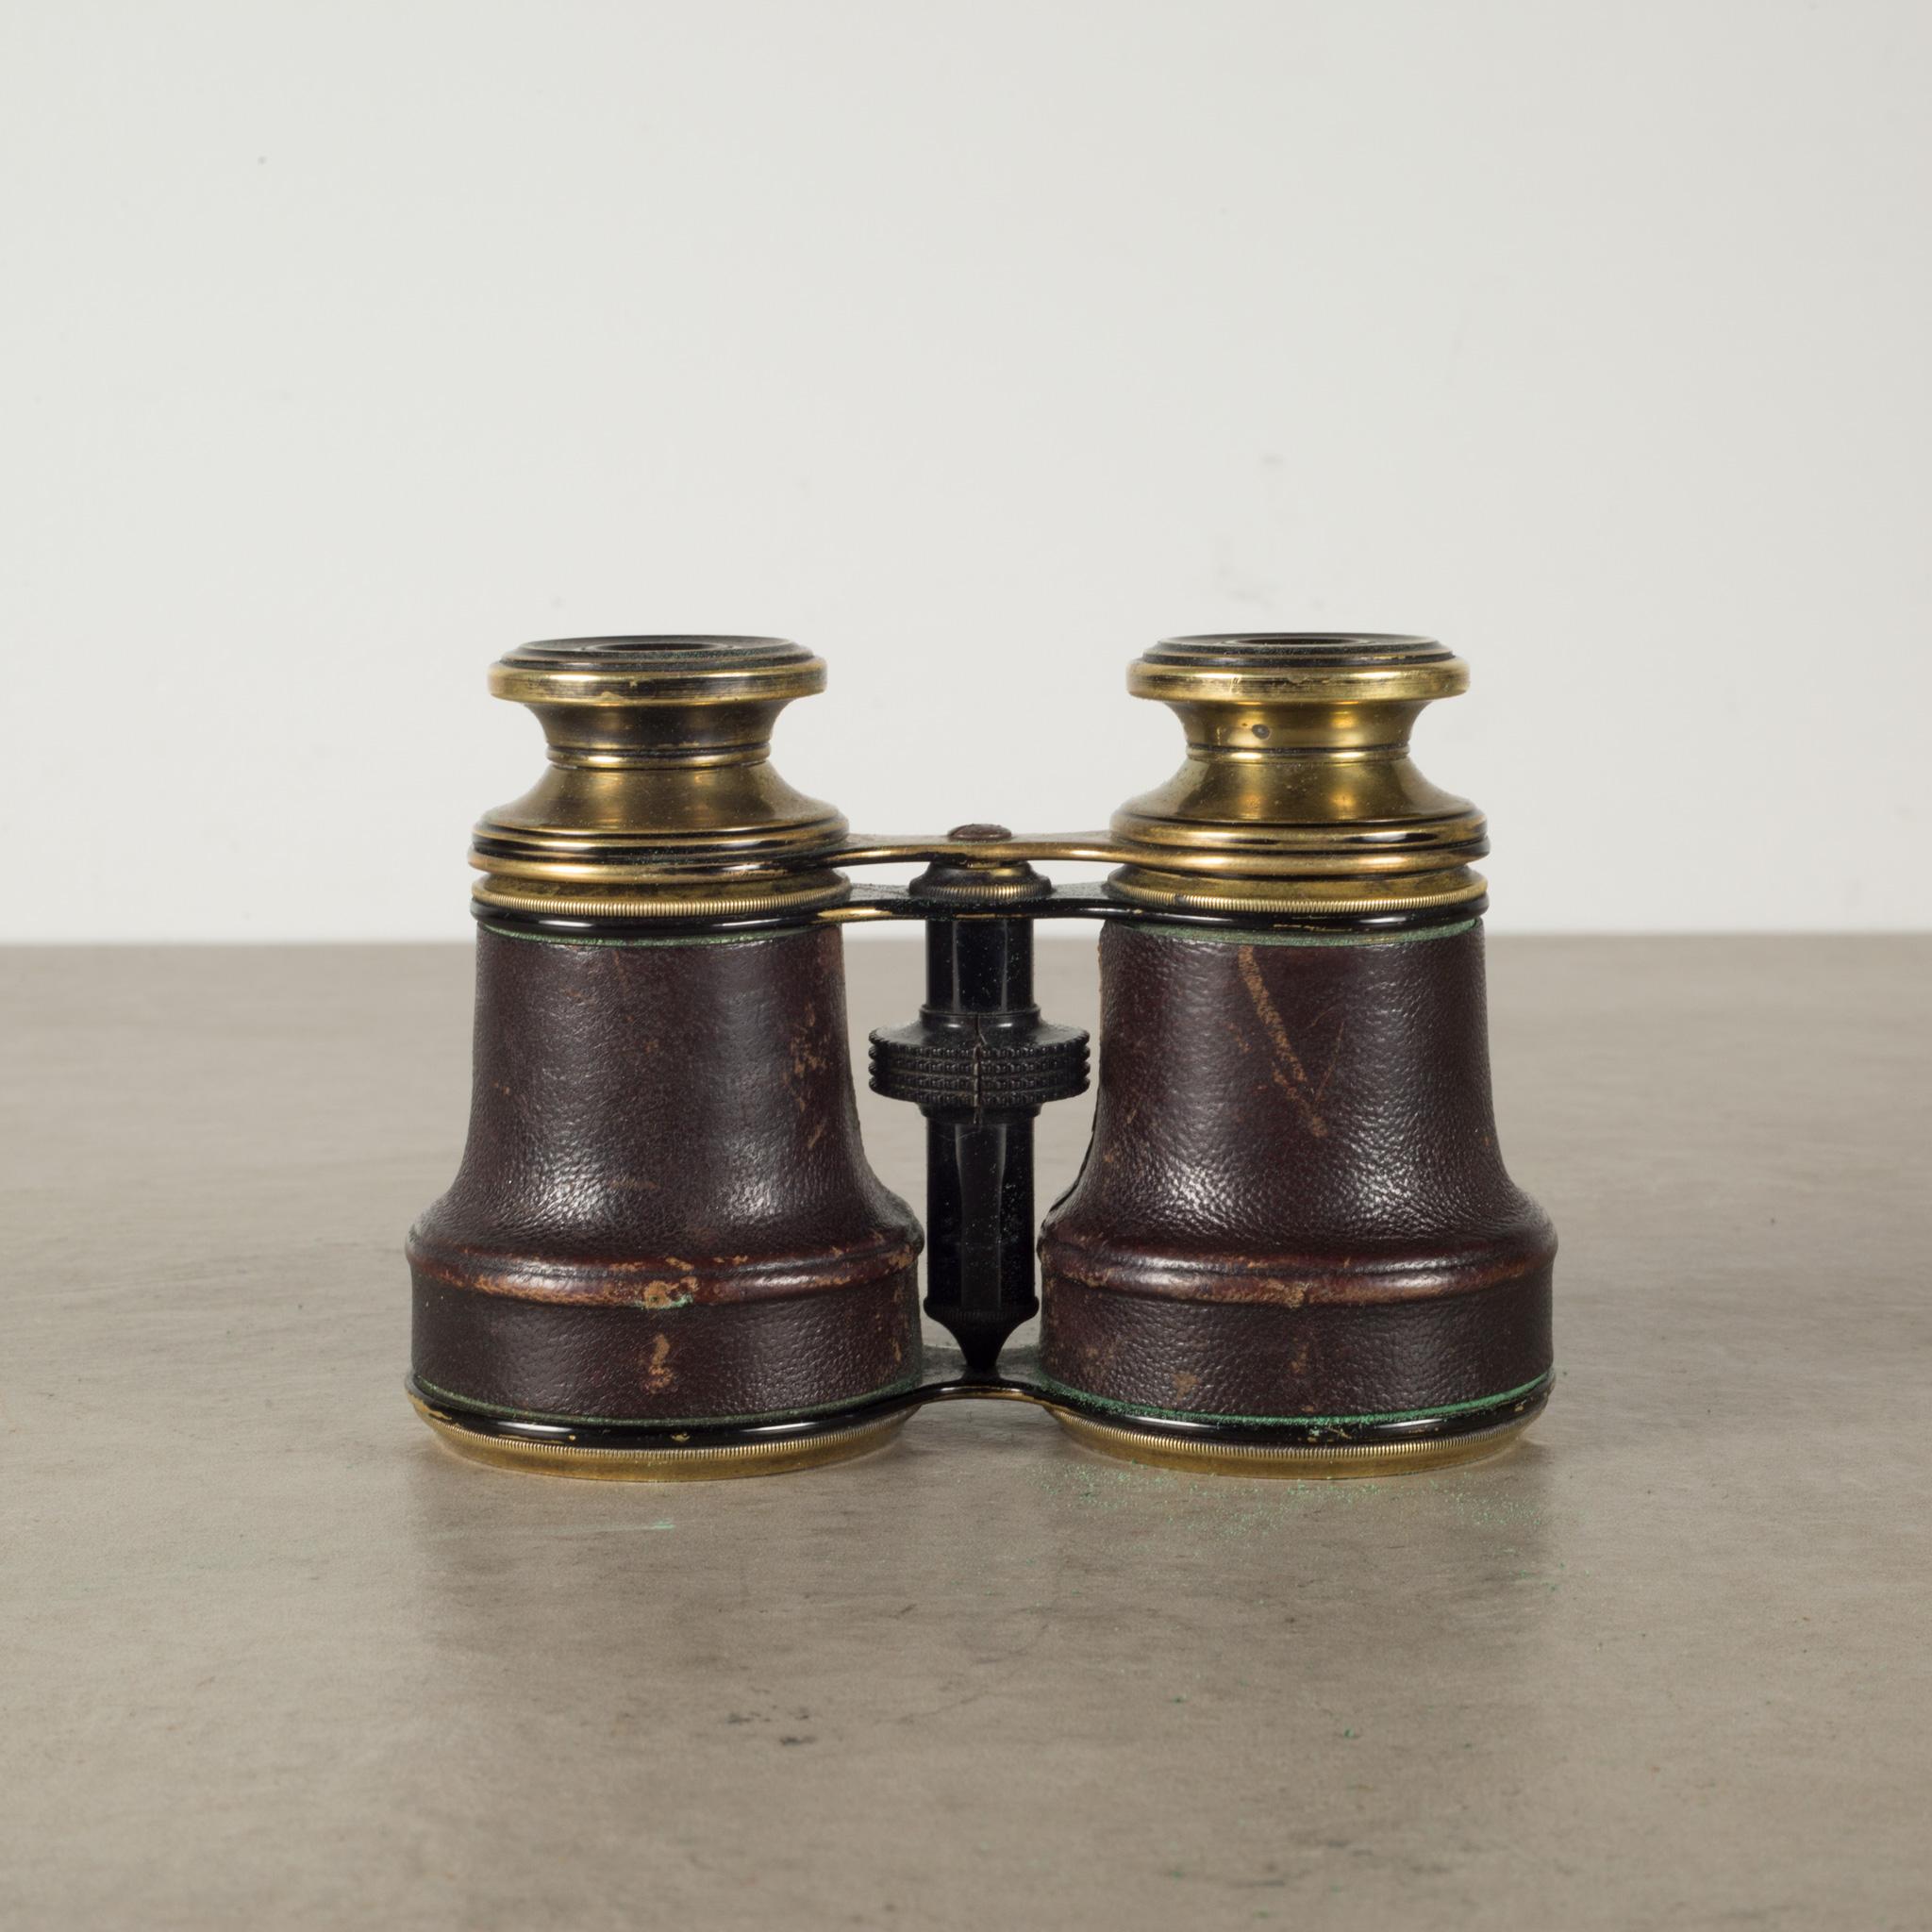 Antique Brass and Leather Binoculars c.1900-1940 1